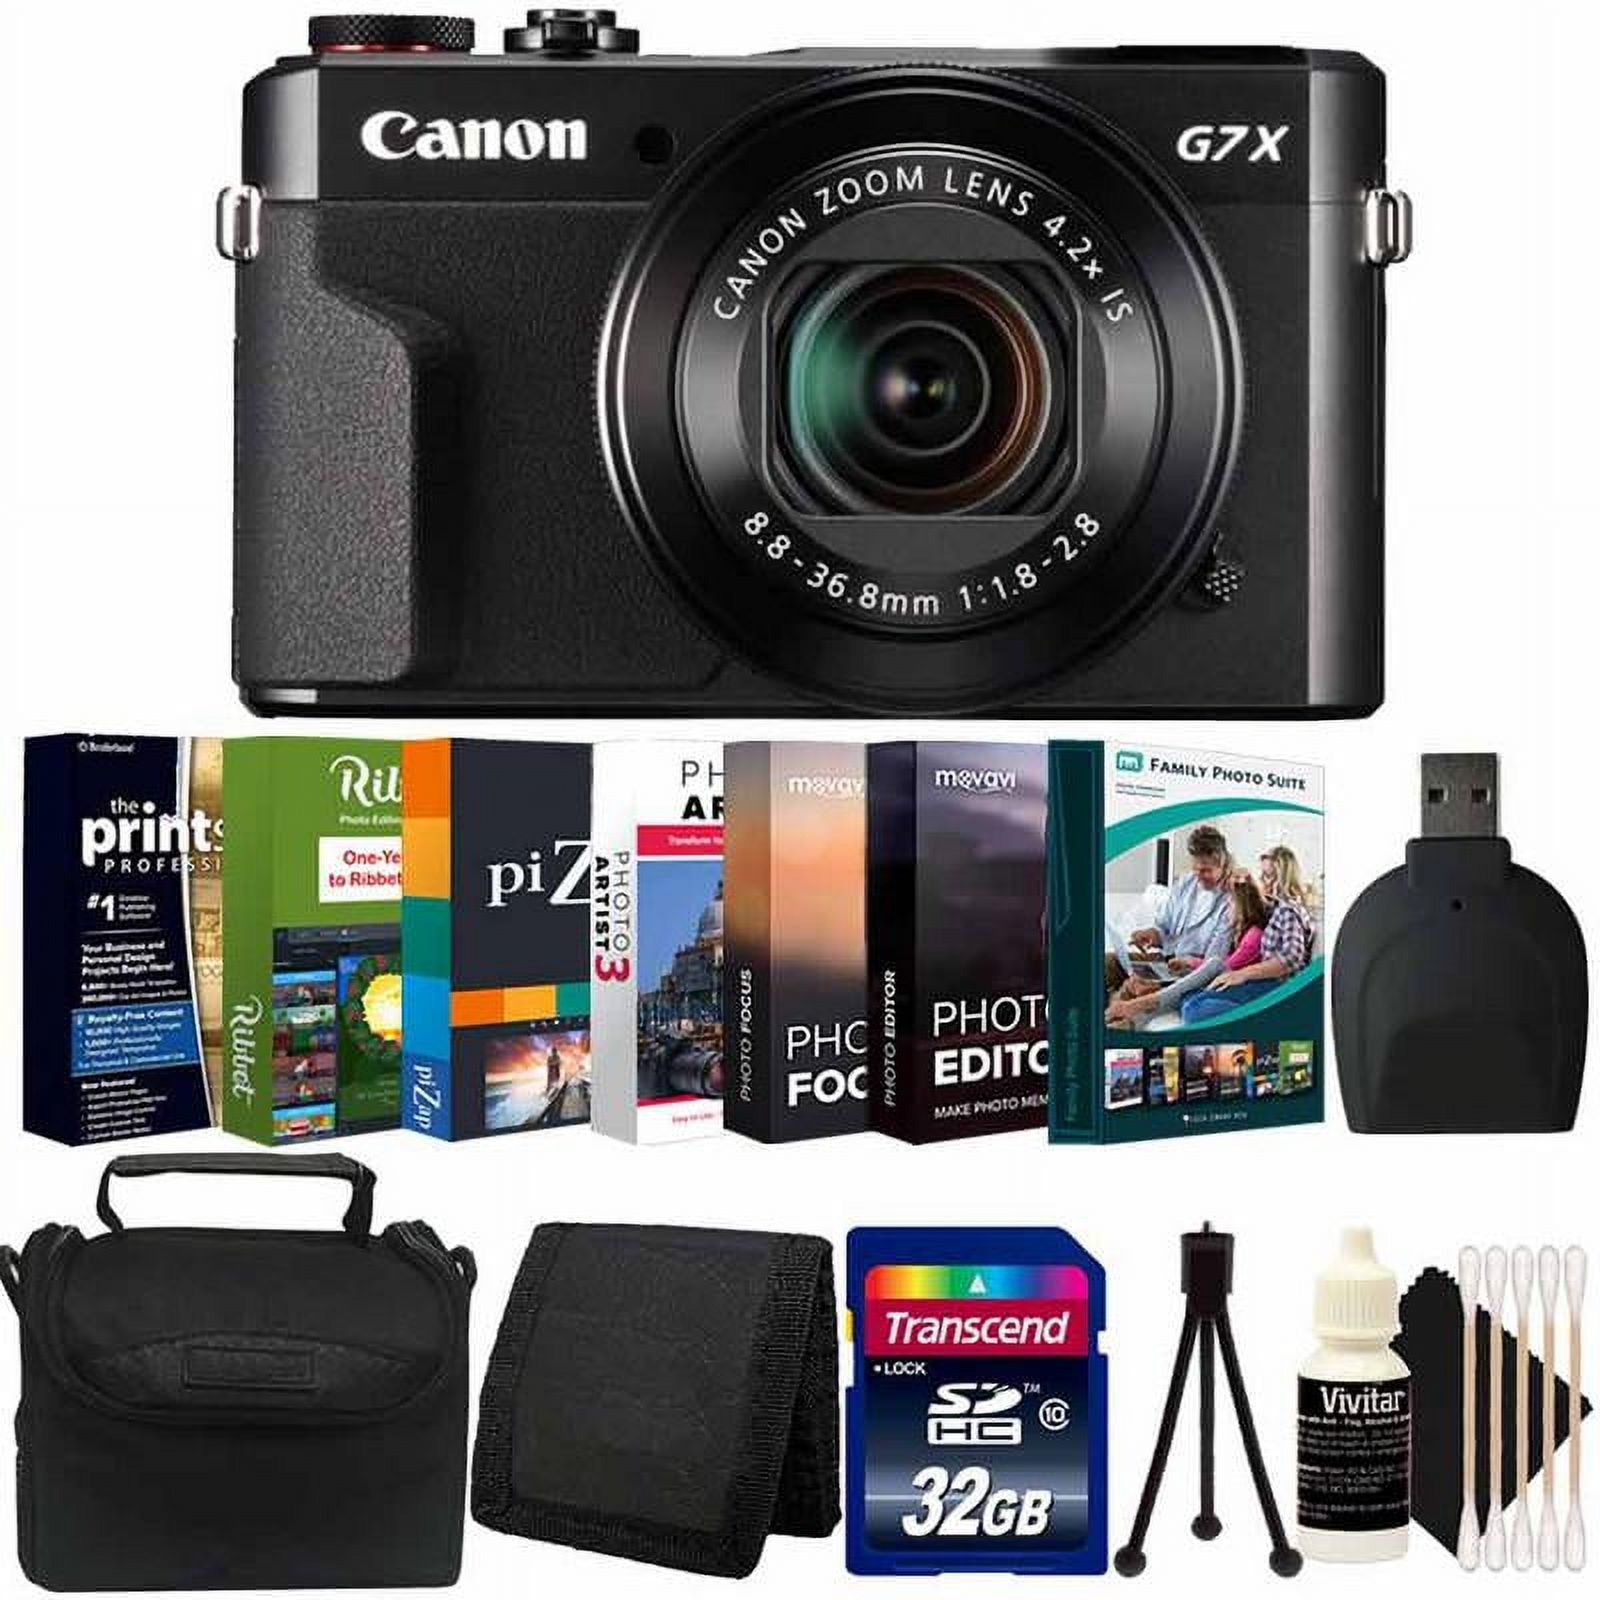 Canon Powershot G7x II 20.1MP Digital Camera Black with Photo Editing Software Kit - image 1 of 9